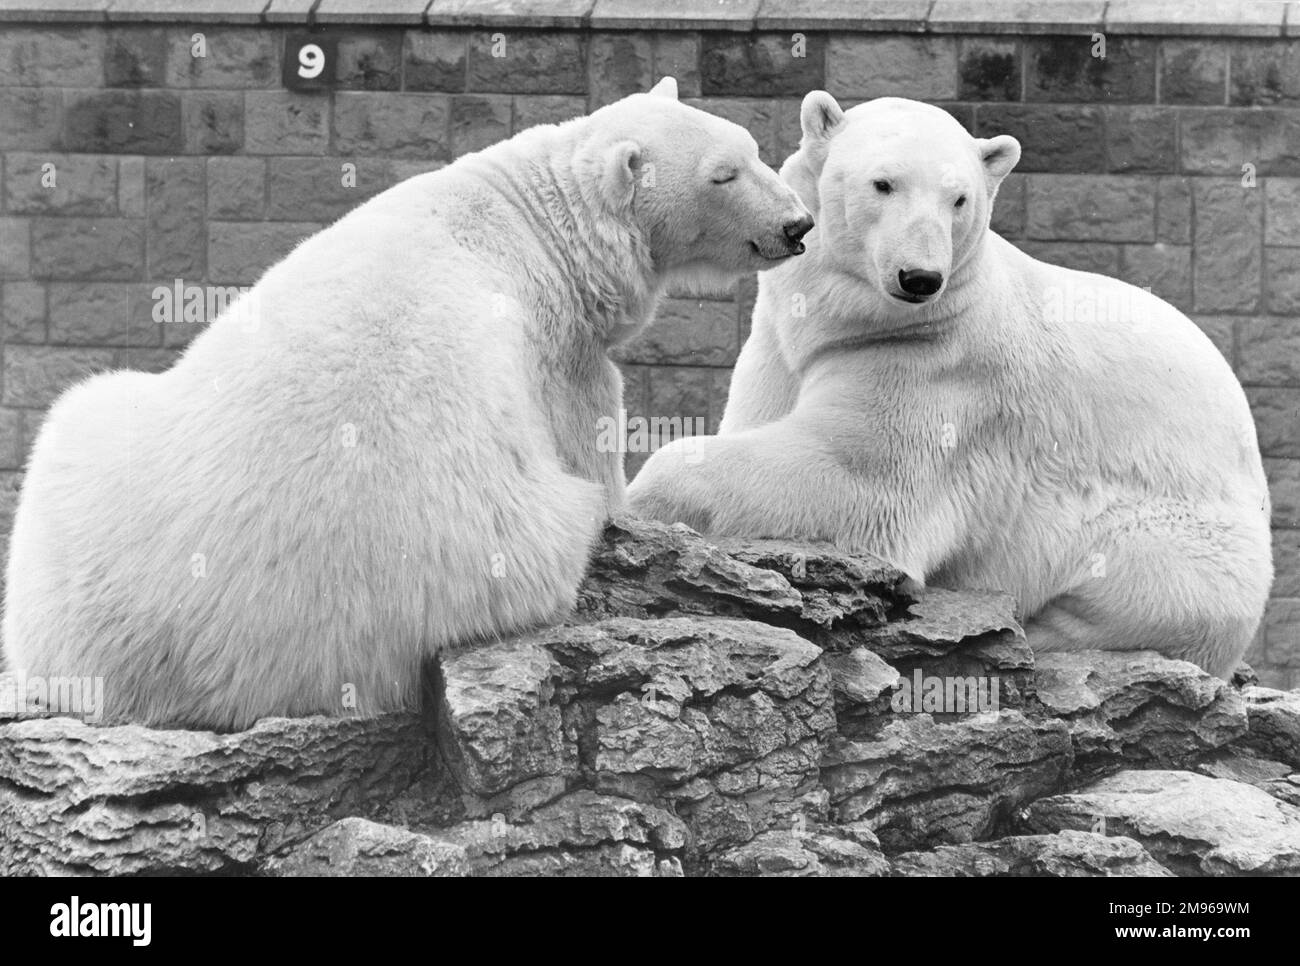 Two polar bears sitting on rocks in a zoo. Stock Photo